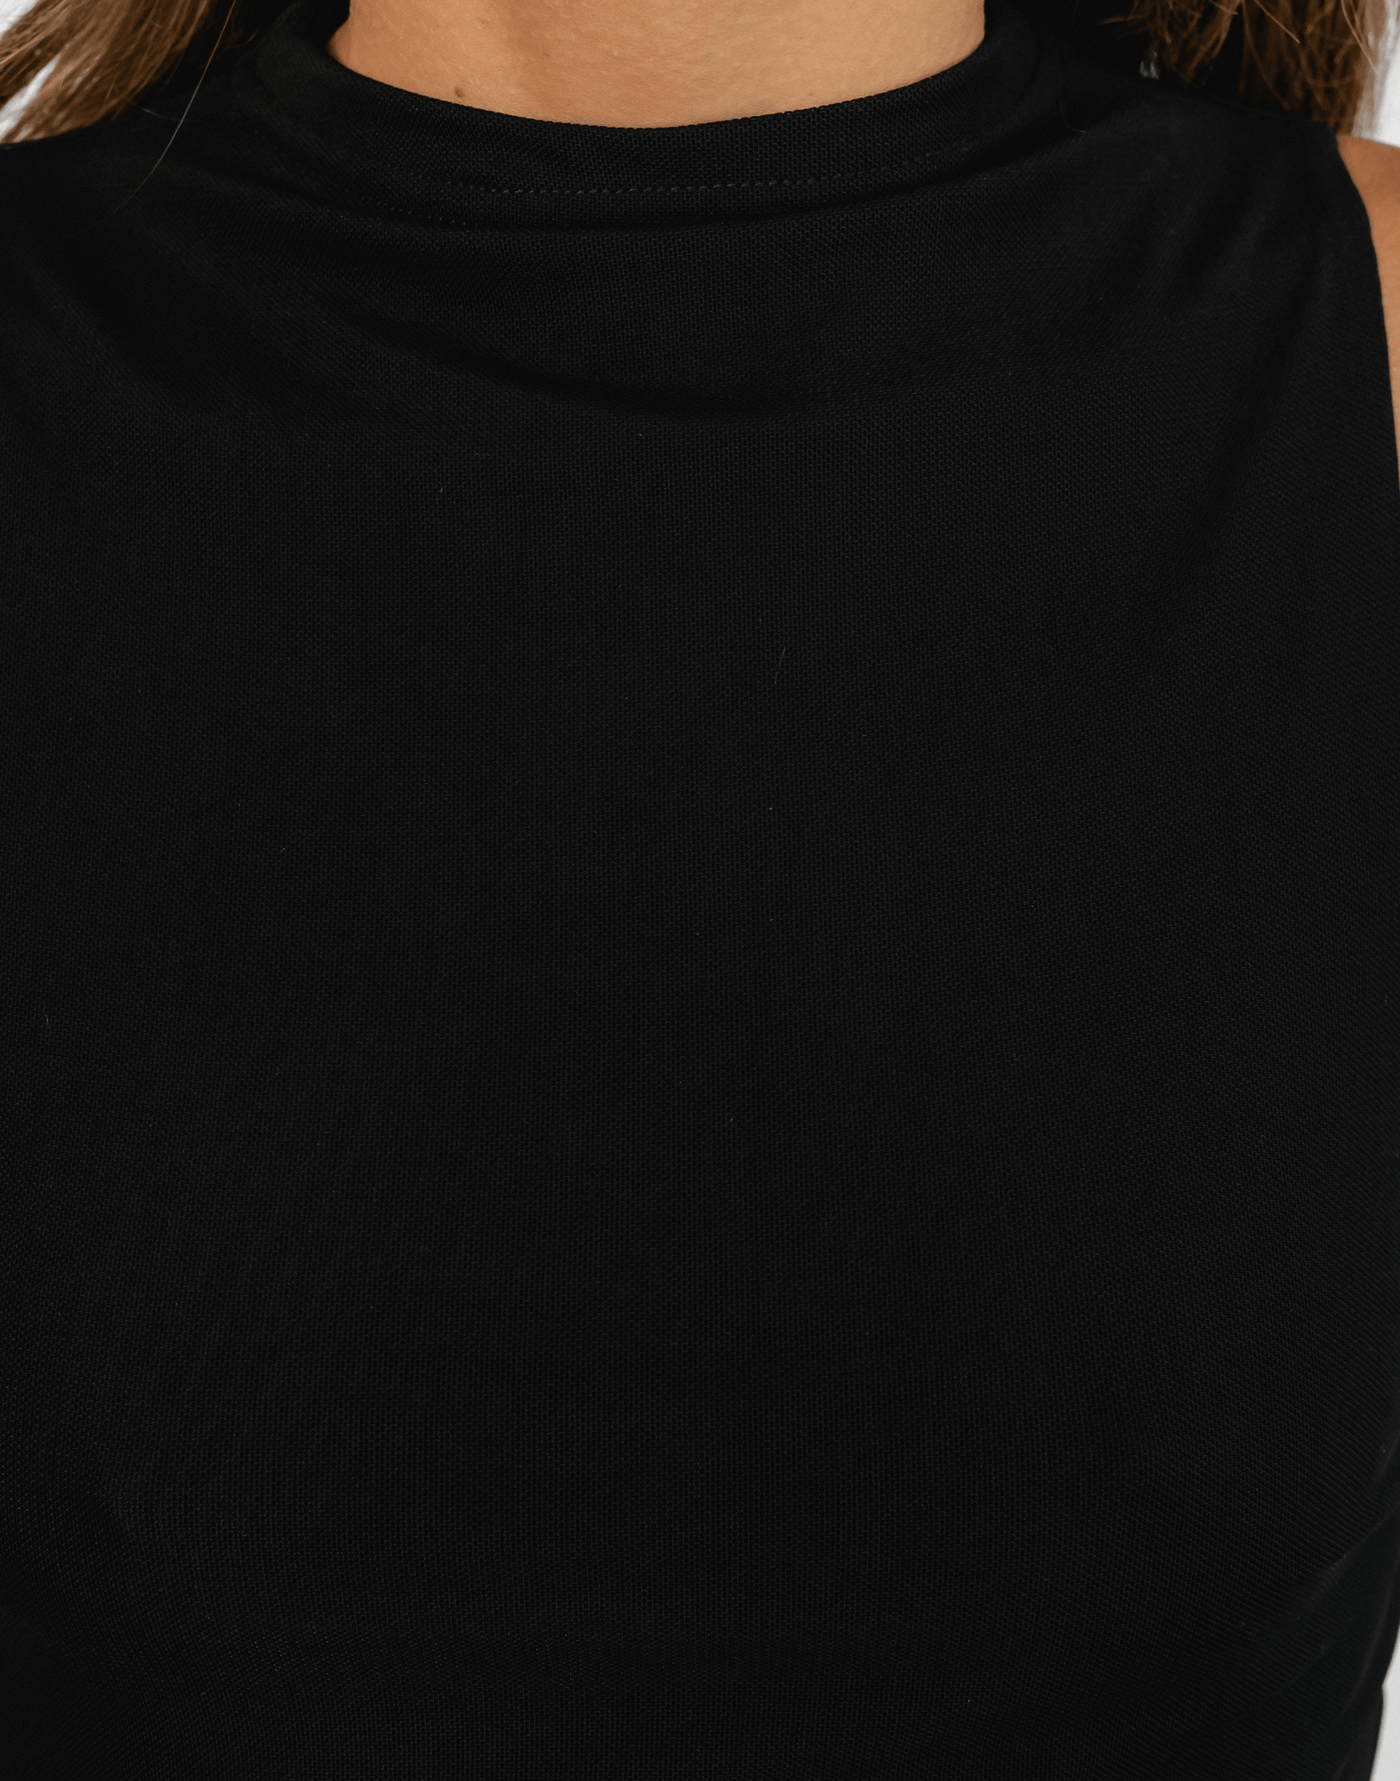 Breaking News Mesh Maxi Dress (Black) - High Neck Maxi Dress - Women's Dress - Charcoal Clothing